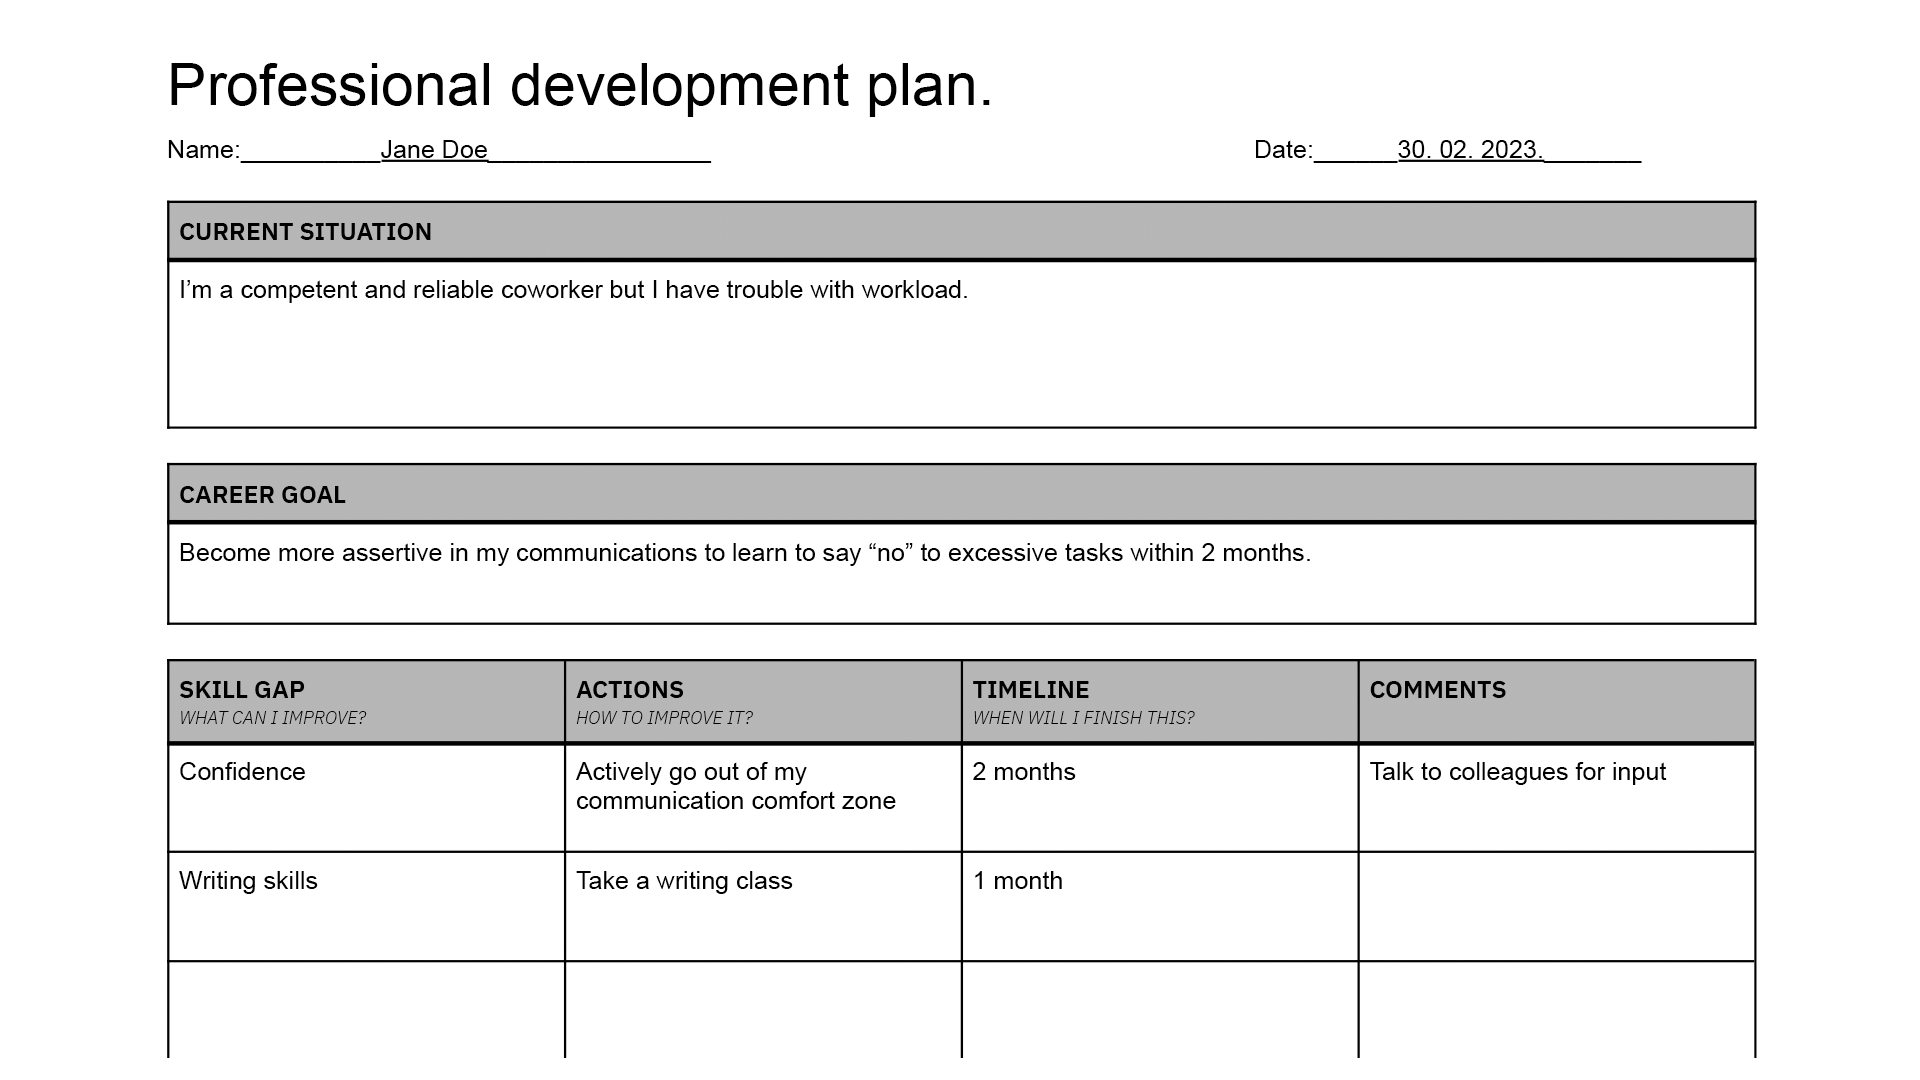 Professional development plan example.